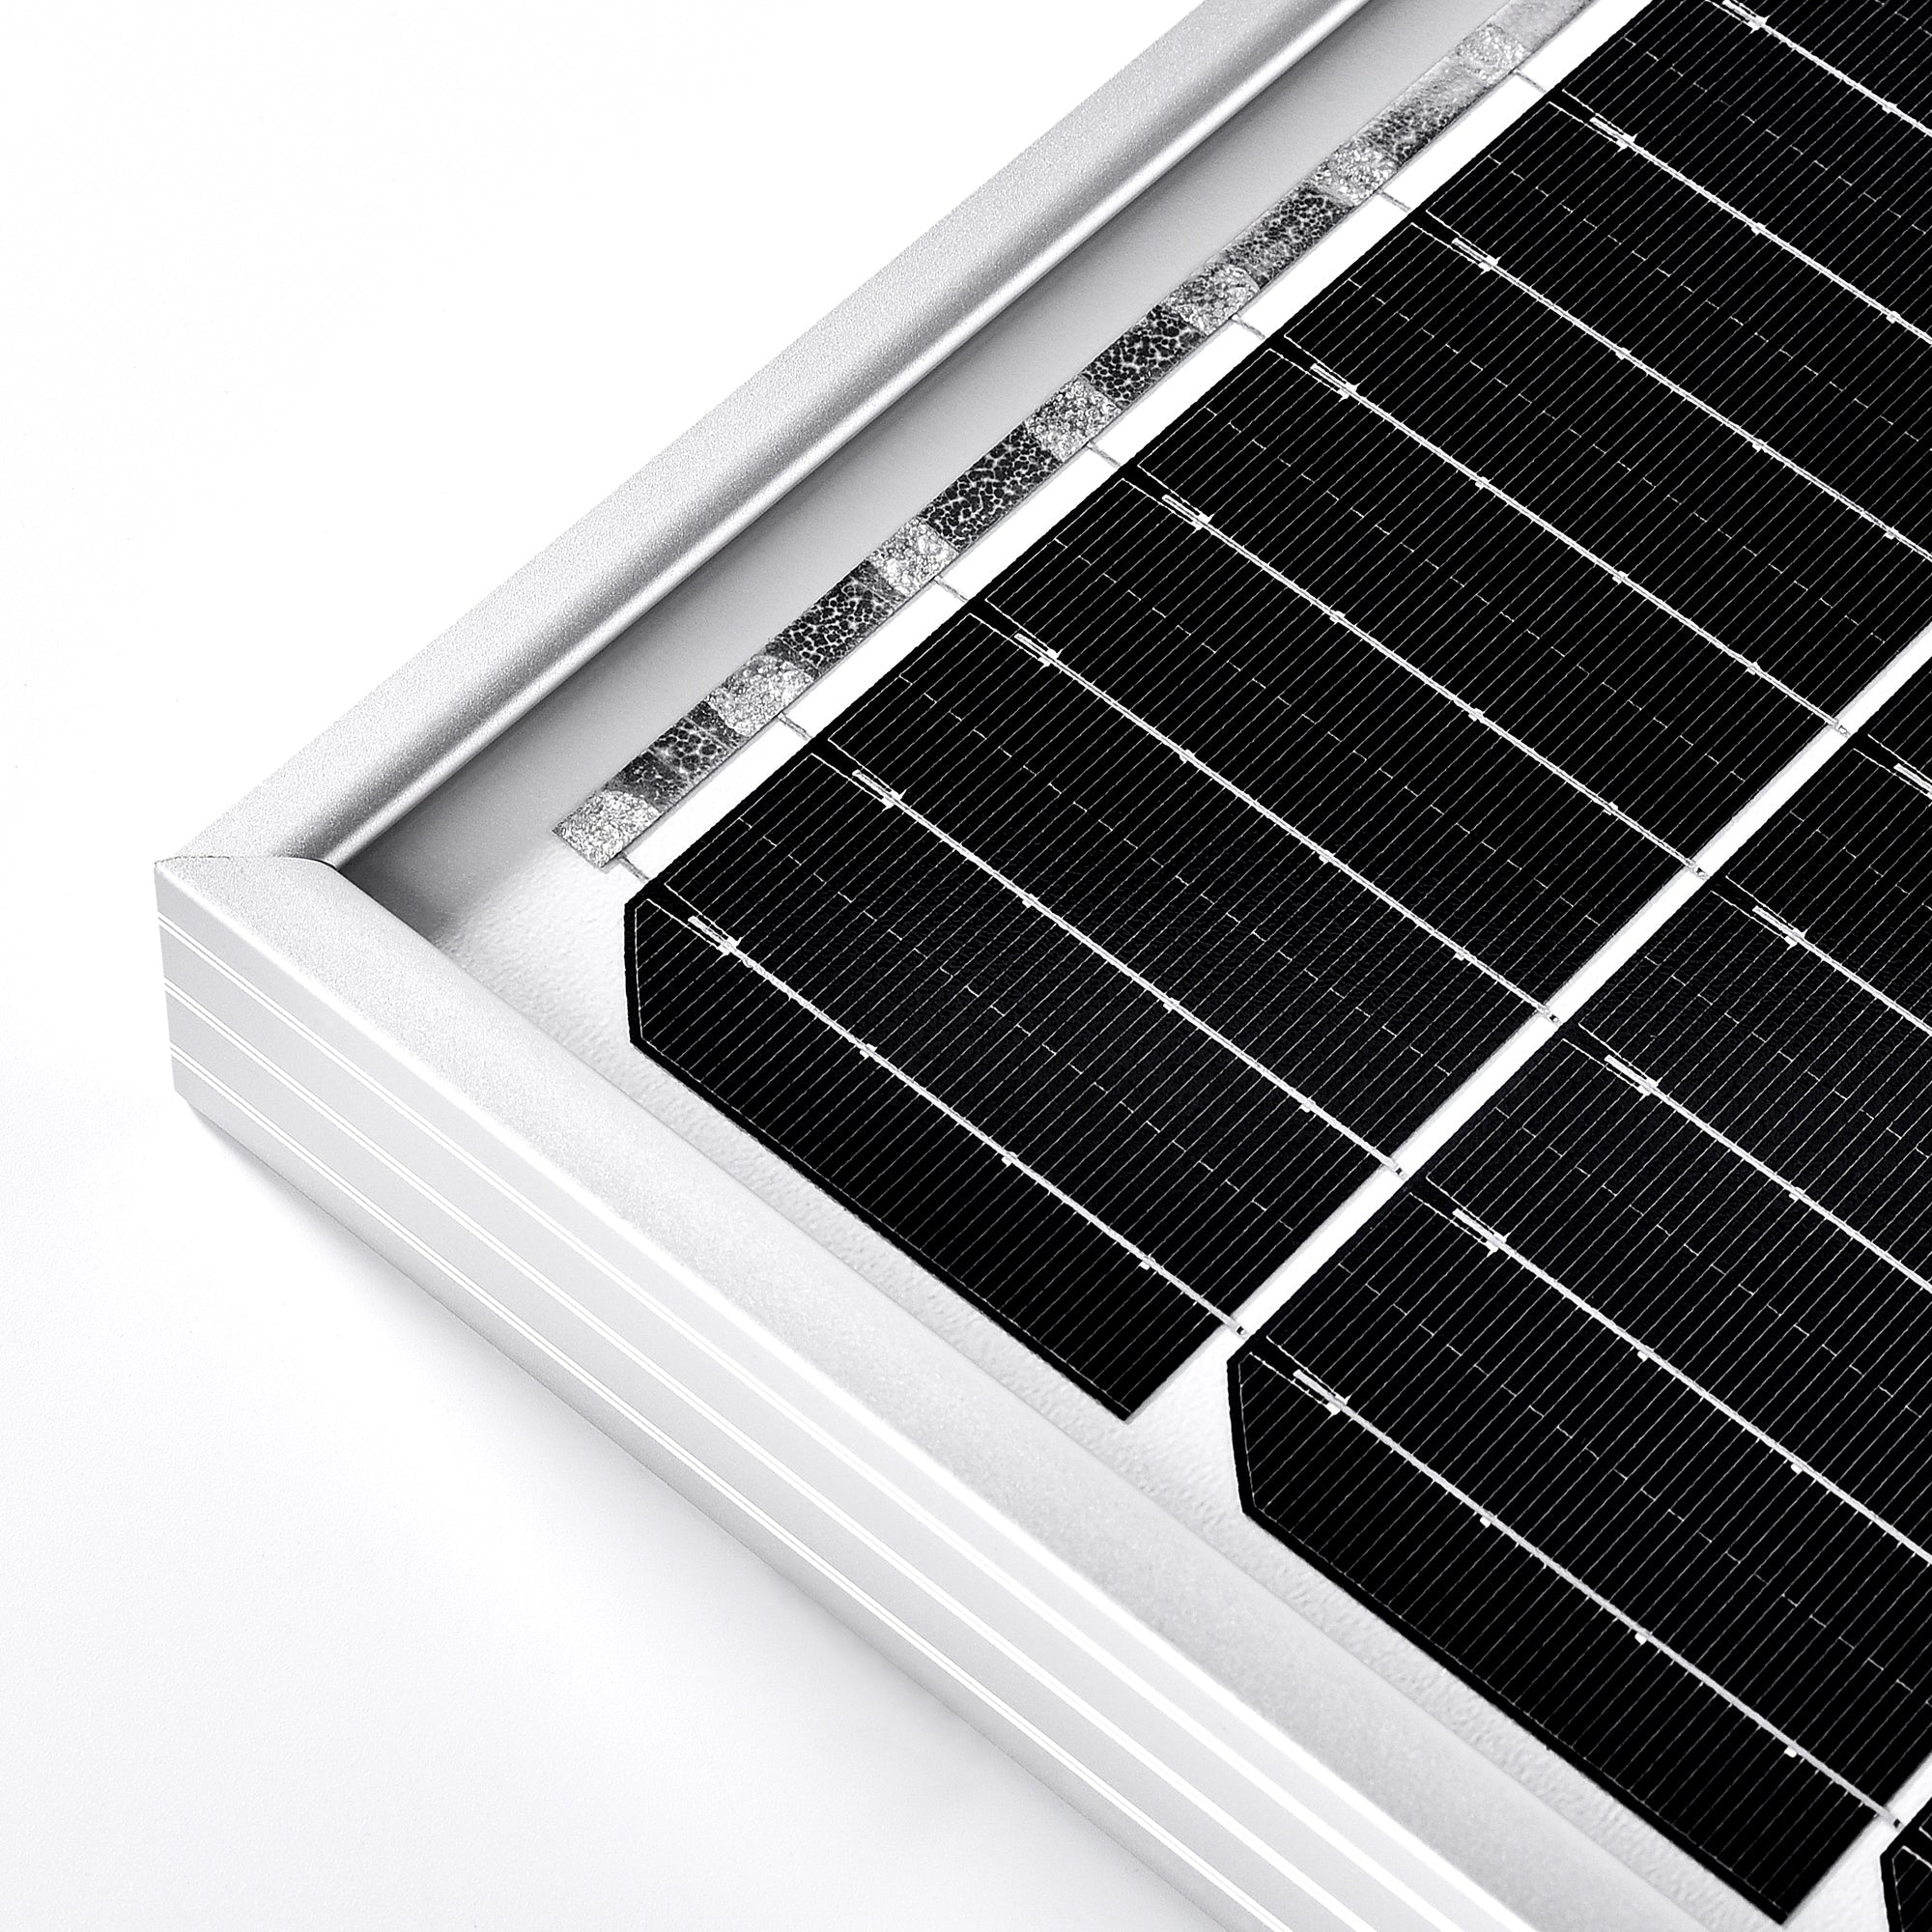 RICH SOLAR MEGA 150 Watt Monocrystalline Solar Panel | Best 12V Panel for RVs and Off-Grid - Solar Generators and Power Stations Plus